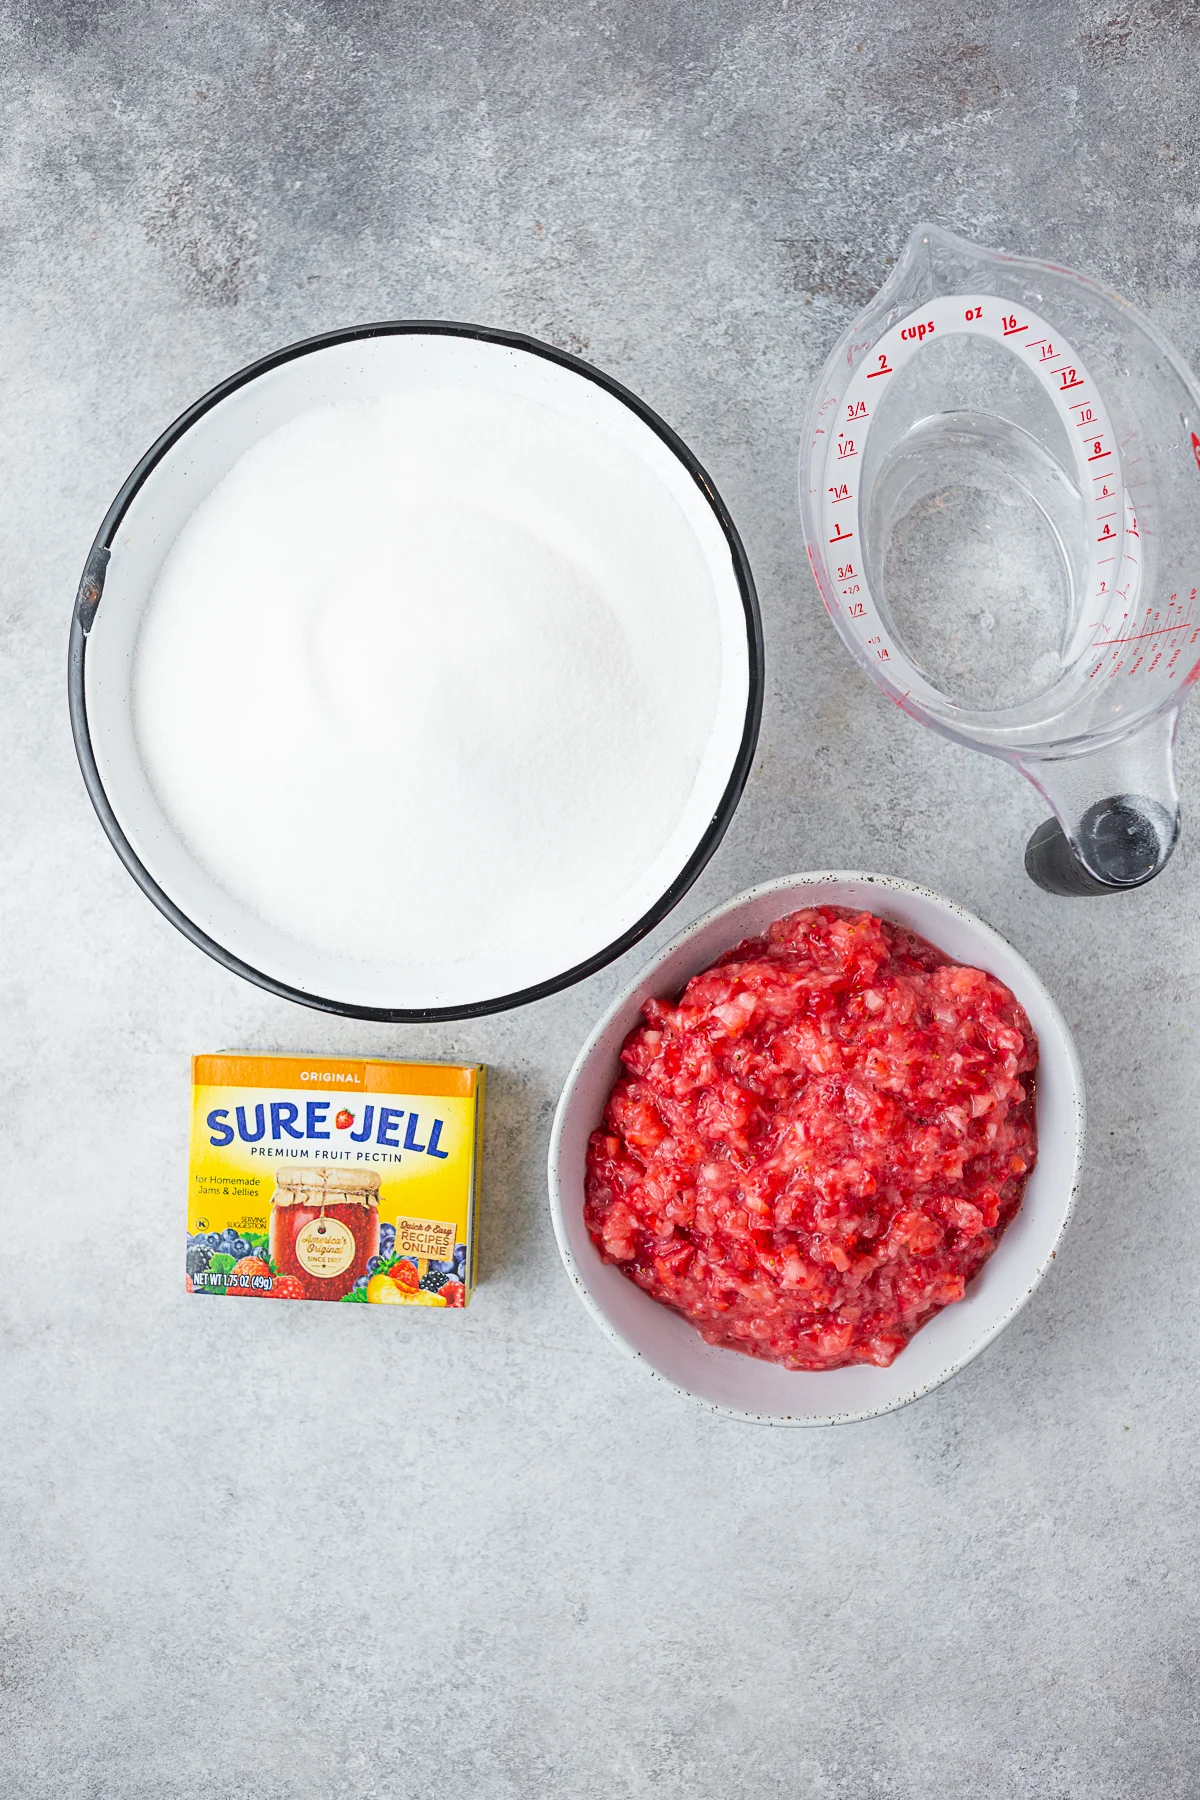 Ingredients to make strawberry jam. 